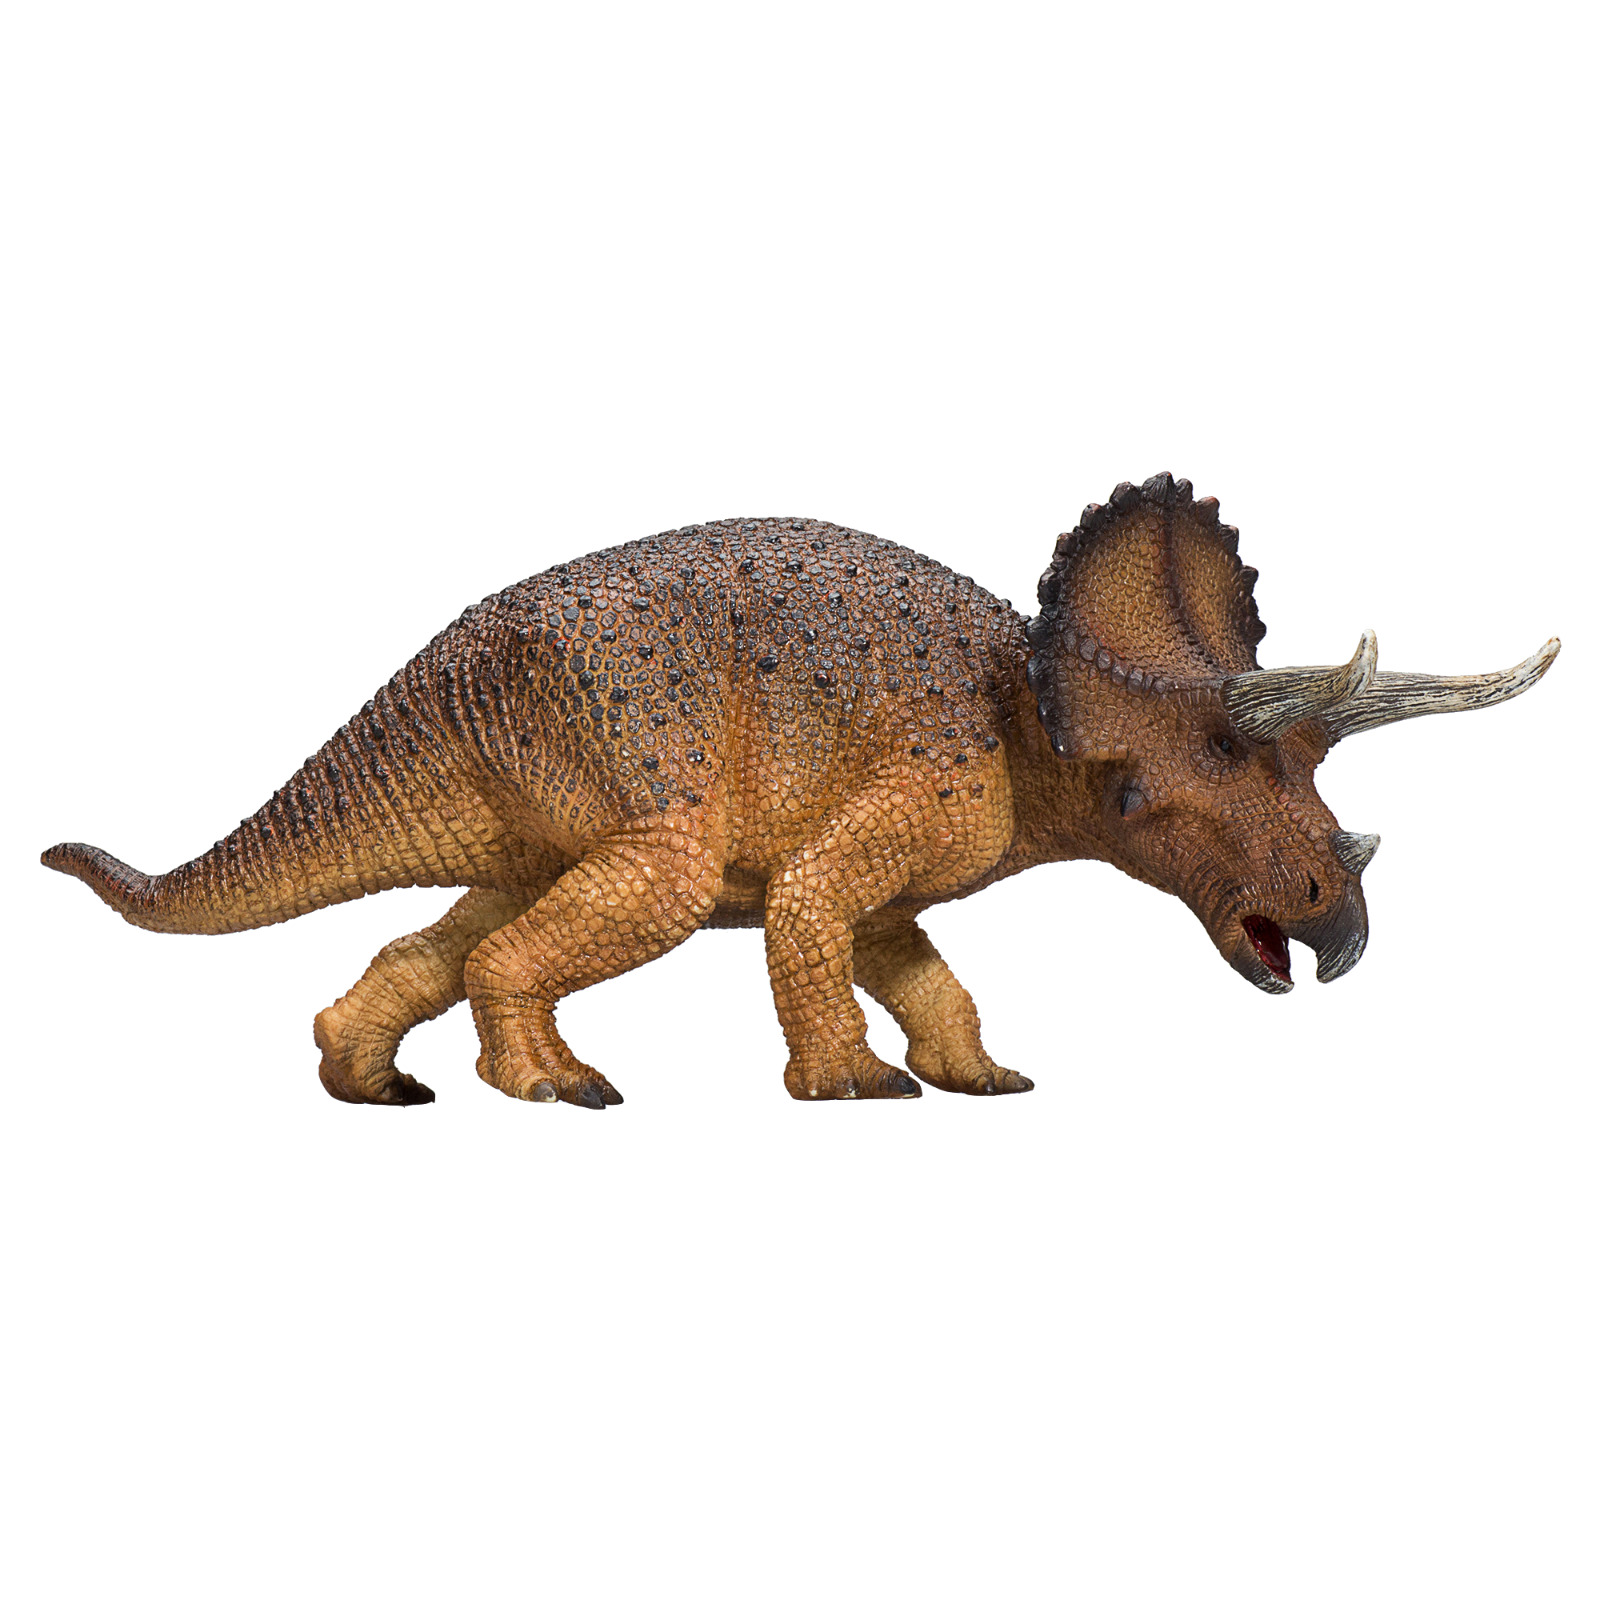 Mojo TRICERATOPS DINOSAUR model figure toy Jurassic prehistoric figurine gift